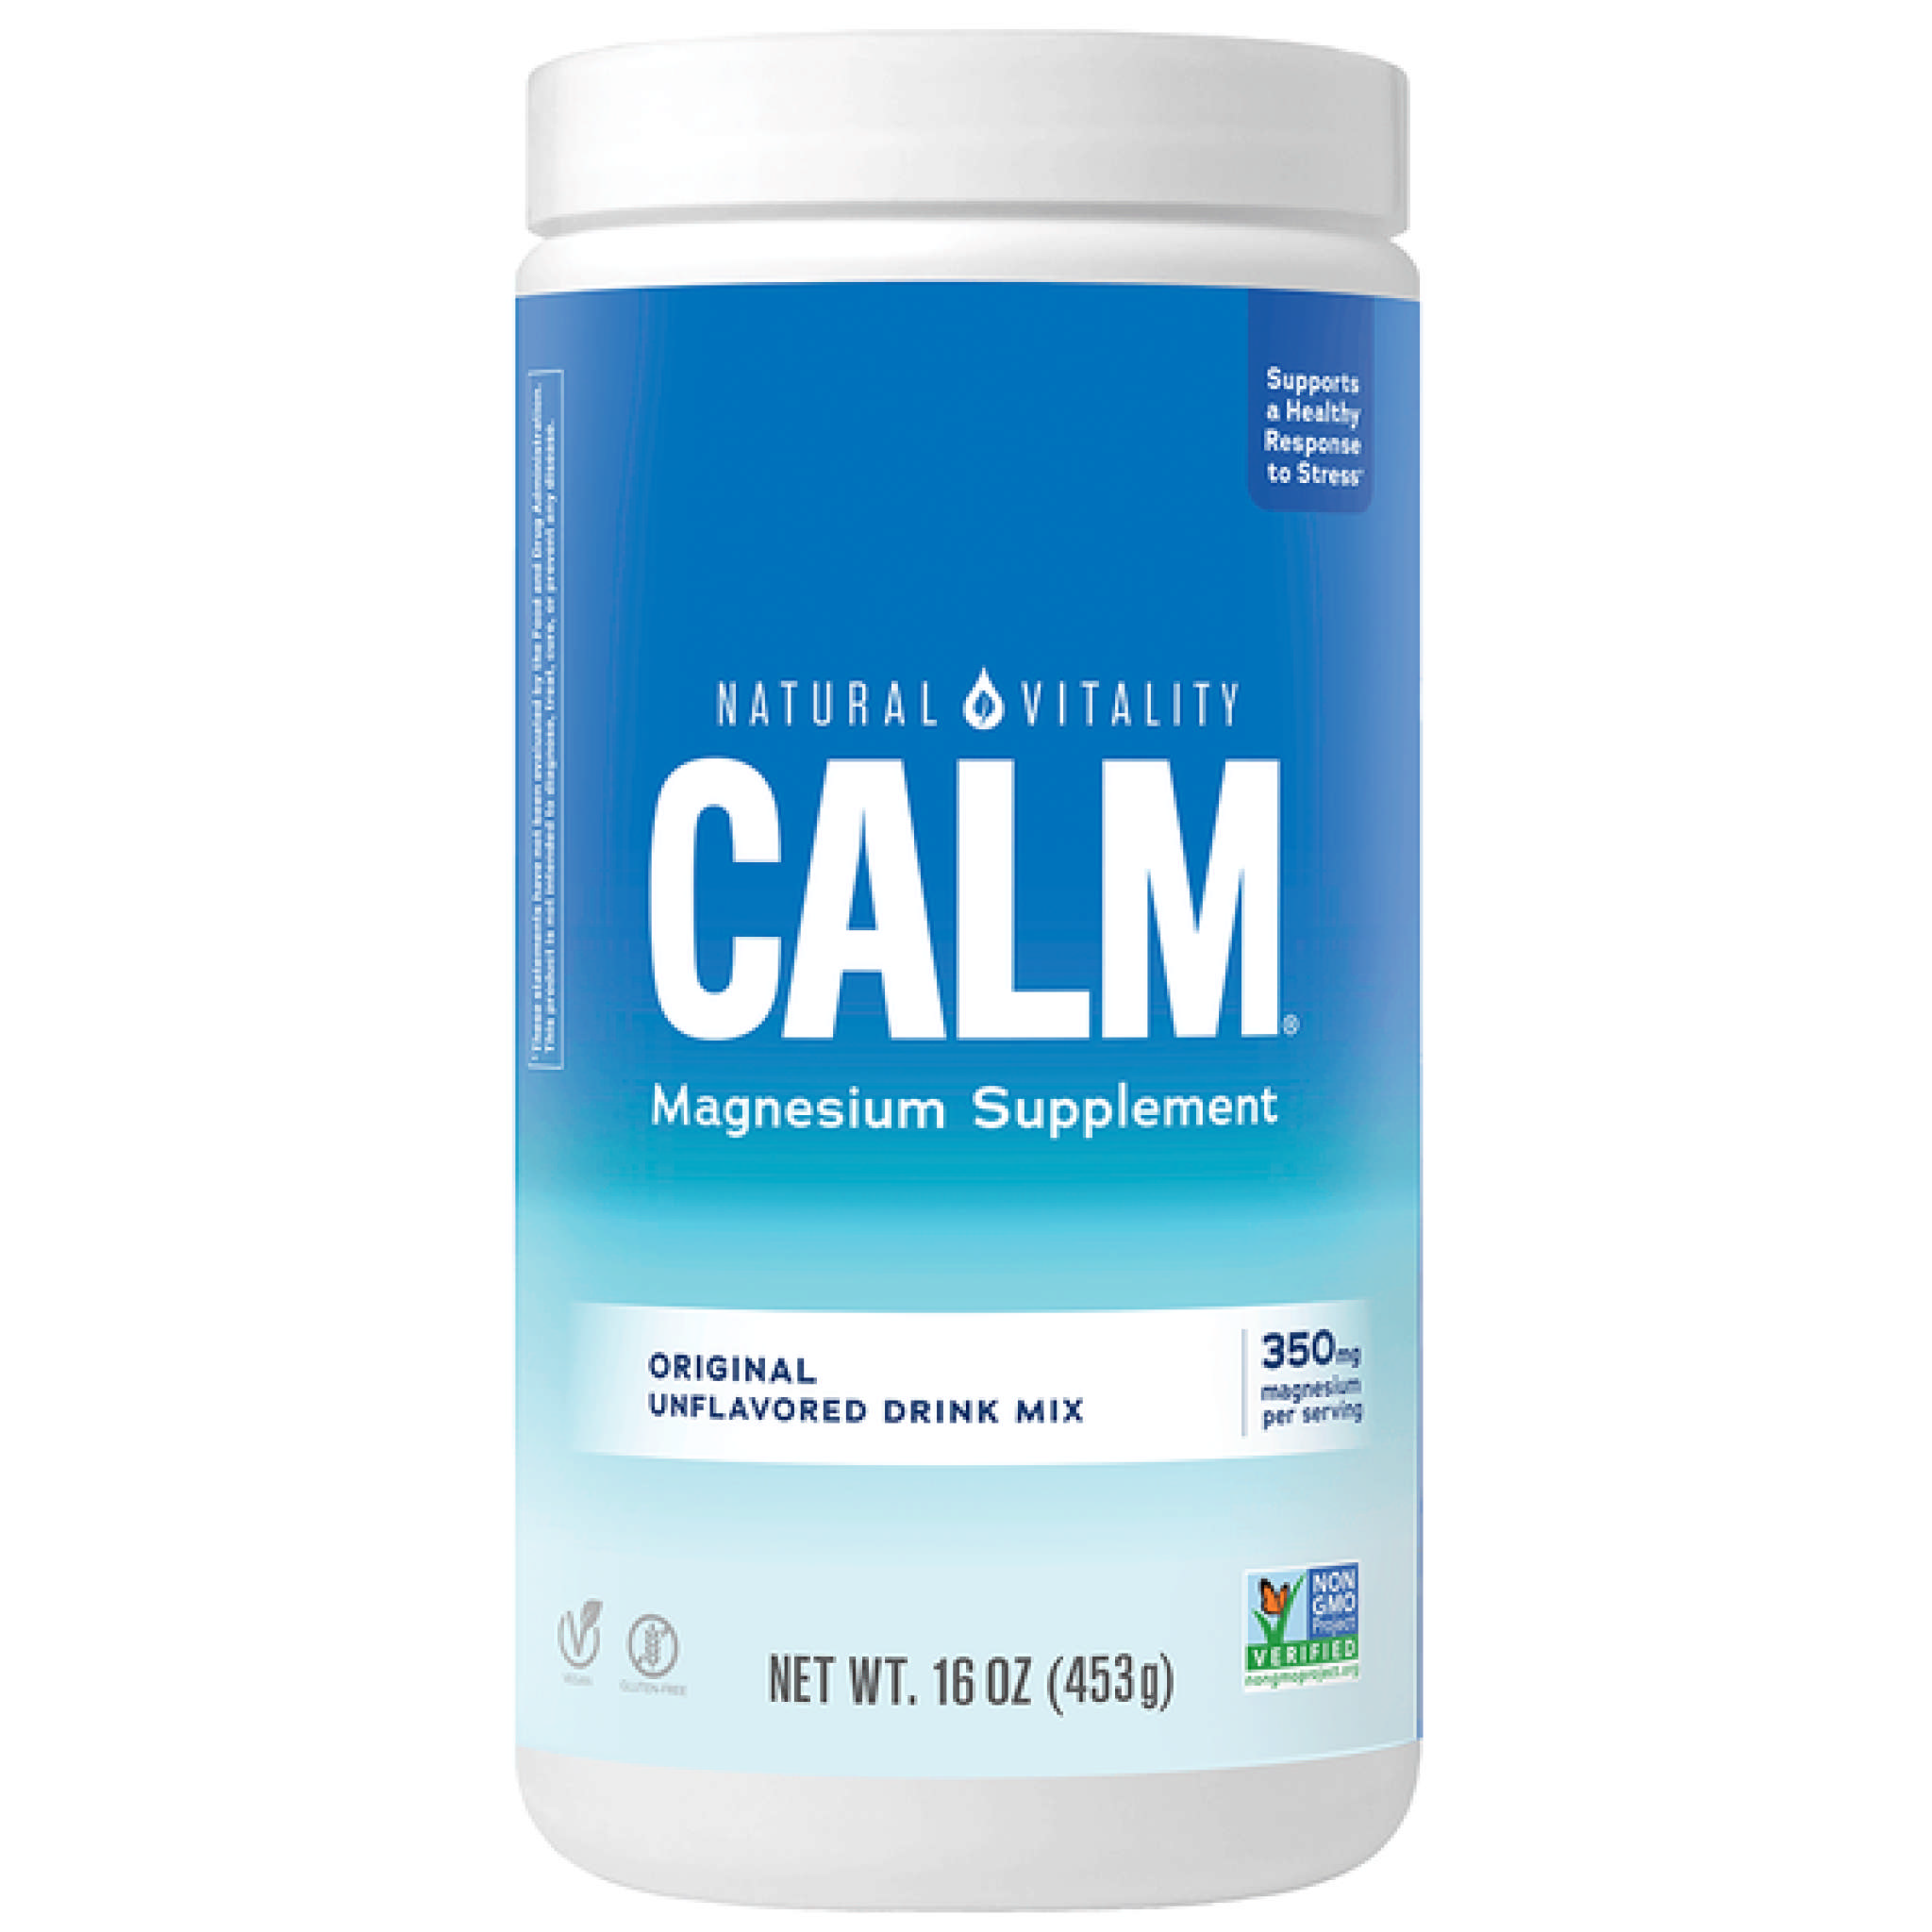 Natural Vitality - Calm powder